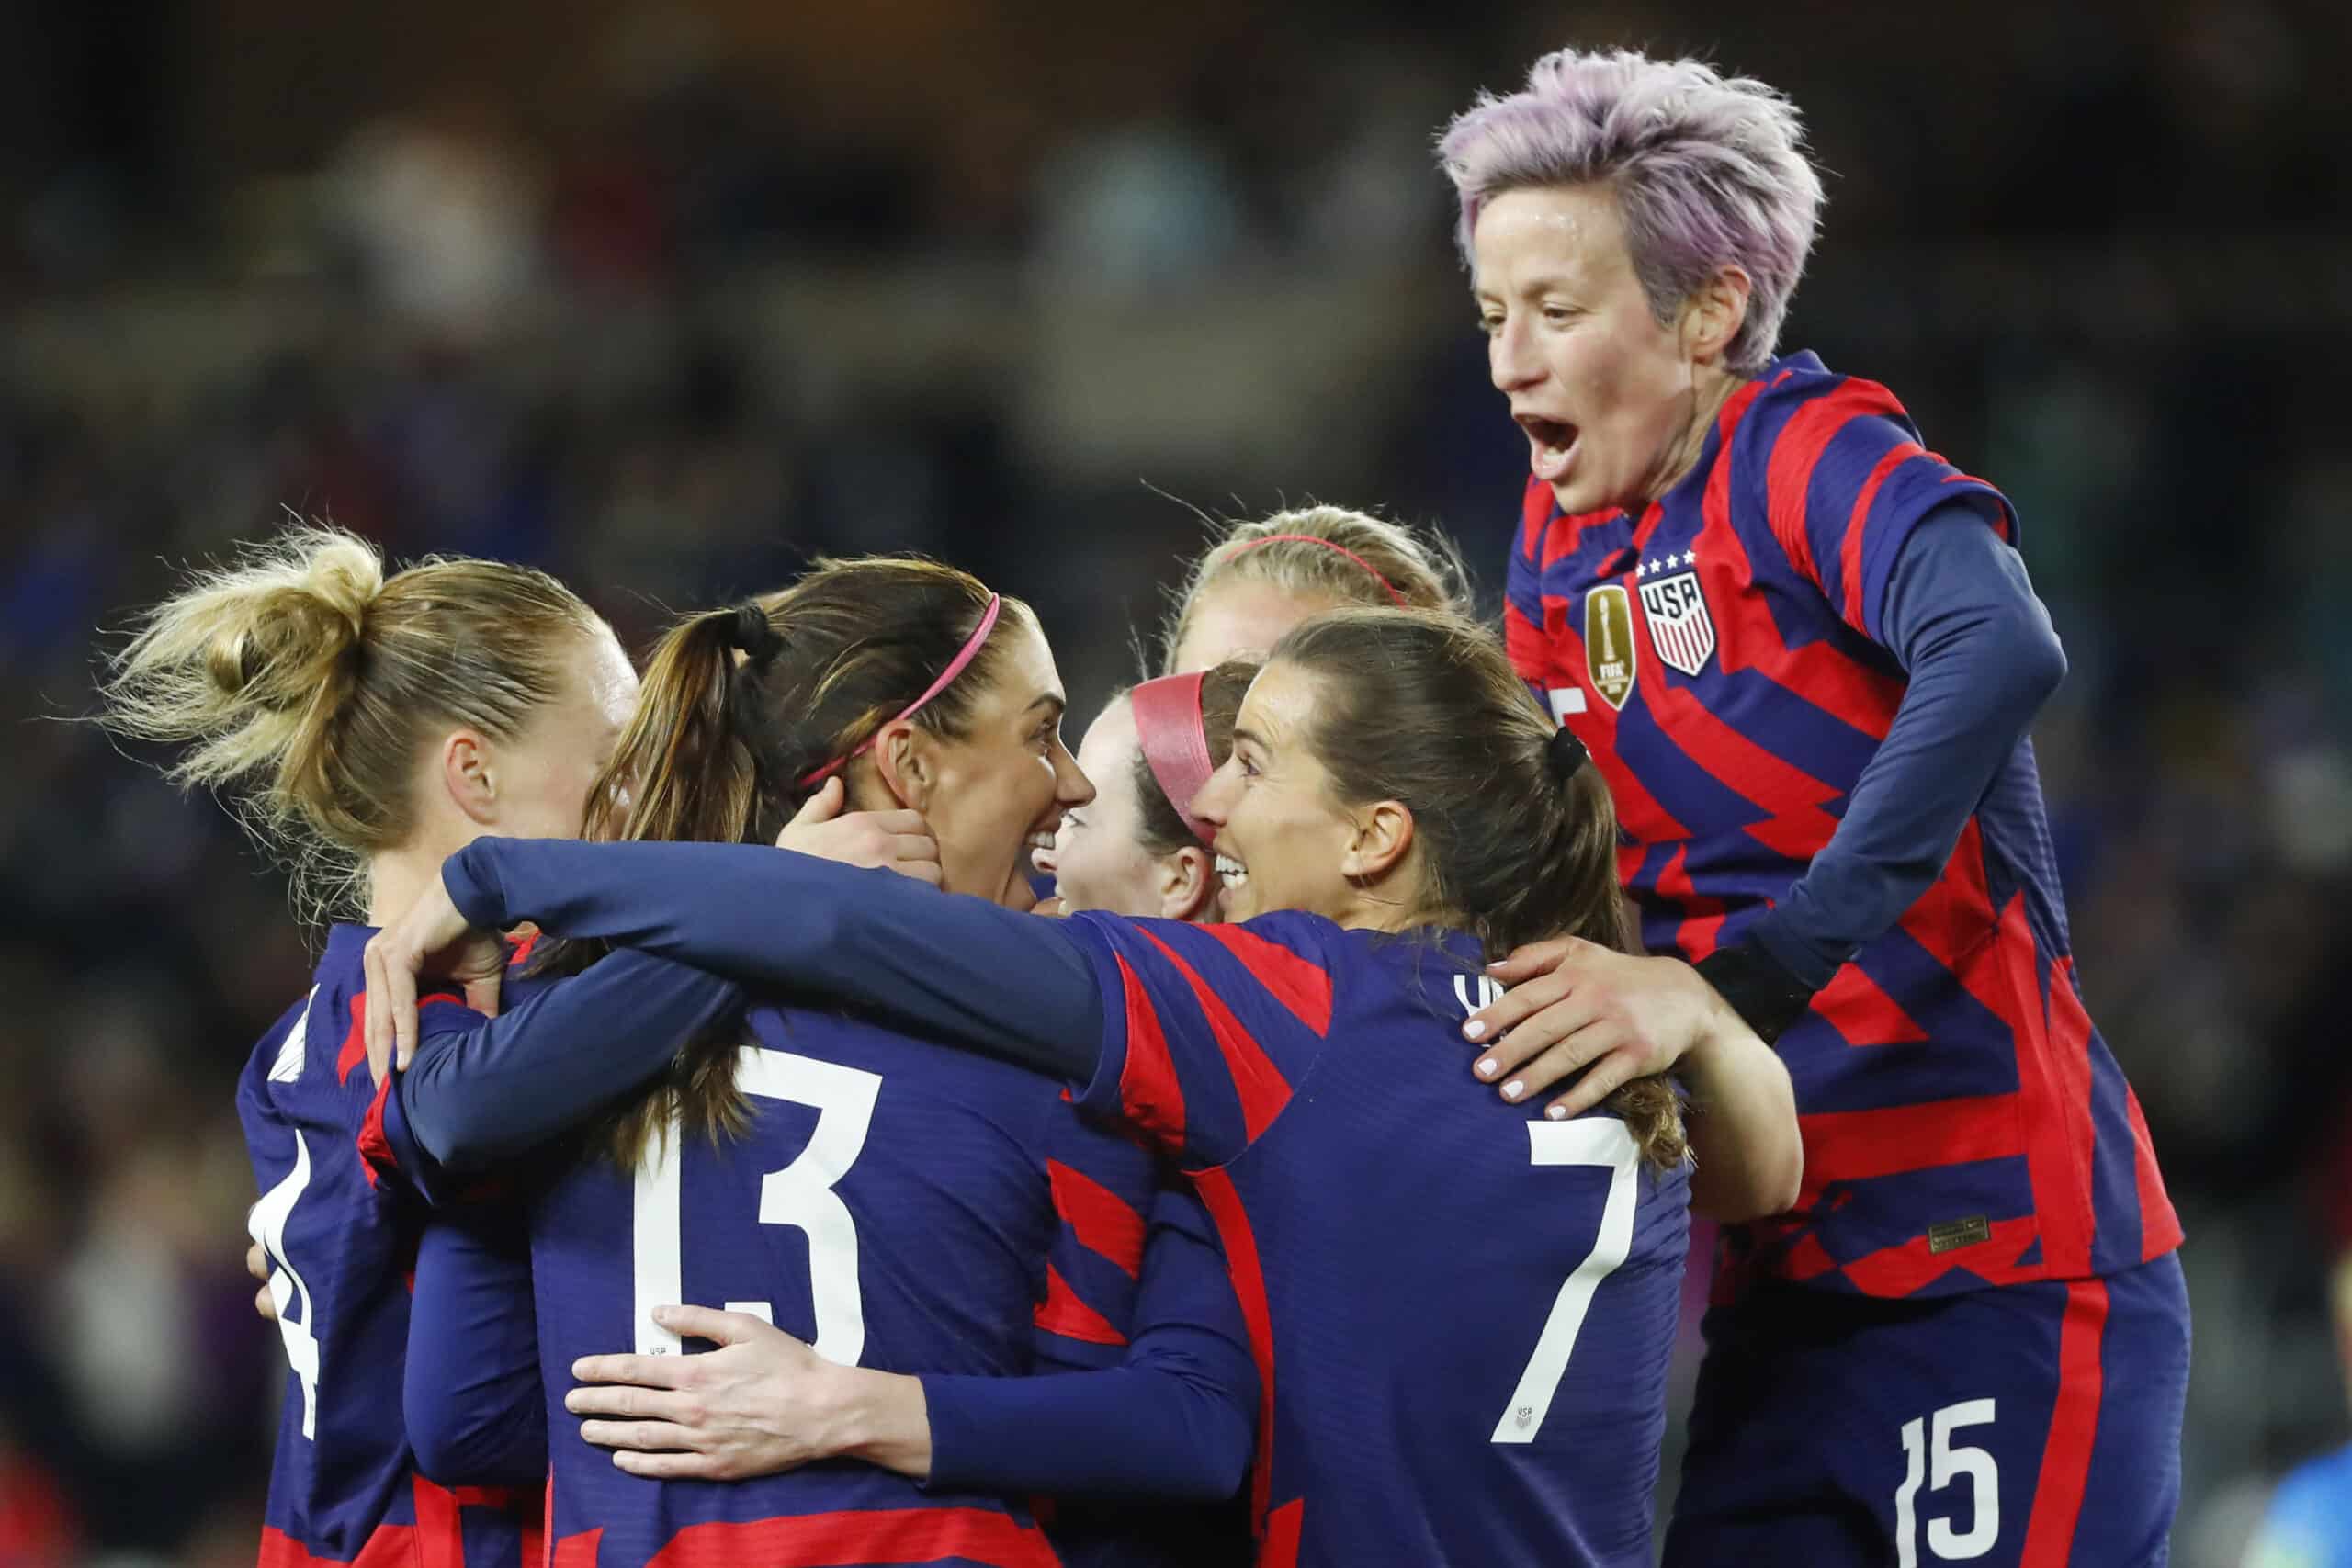 23 Pac-12 Women's Soccer stars to appear in 2023 FIFA Women's